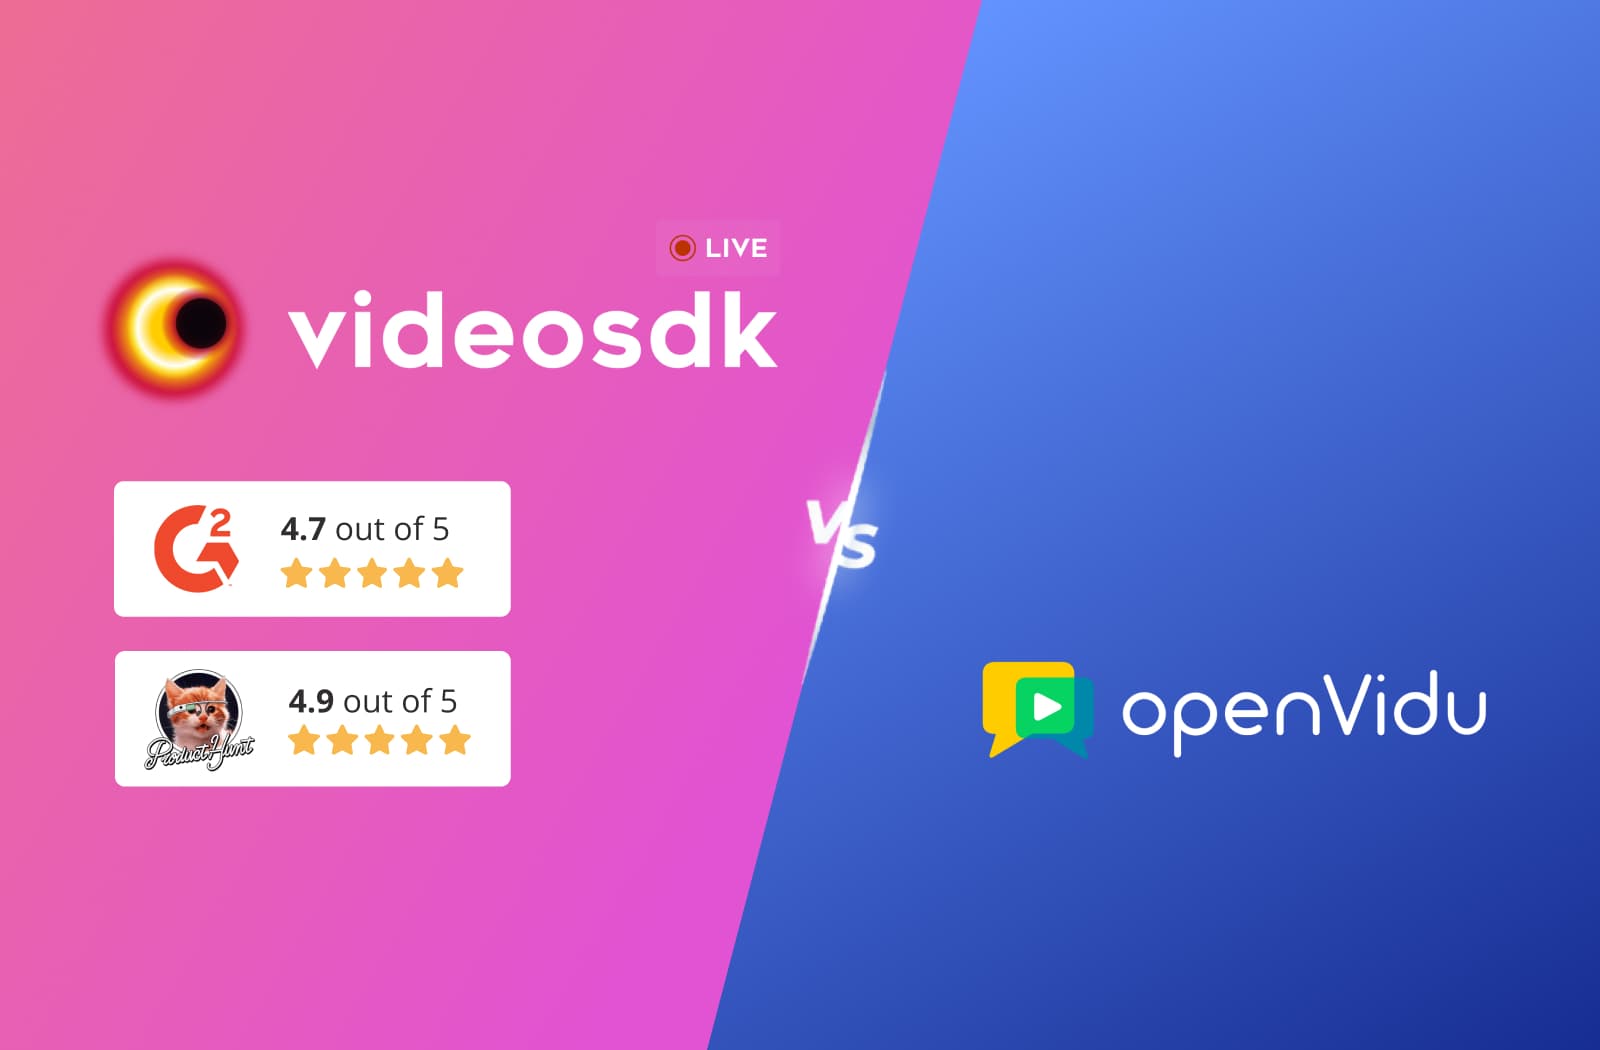 OpenVidu vs Videosdk